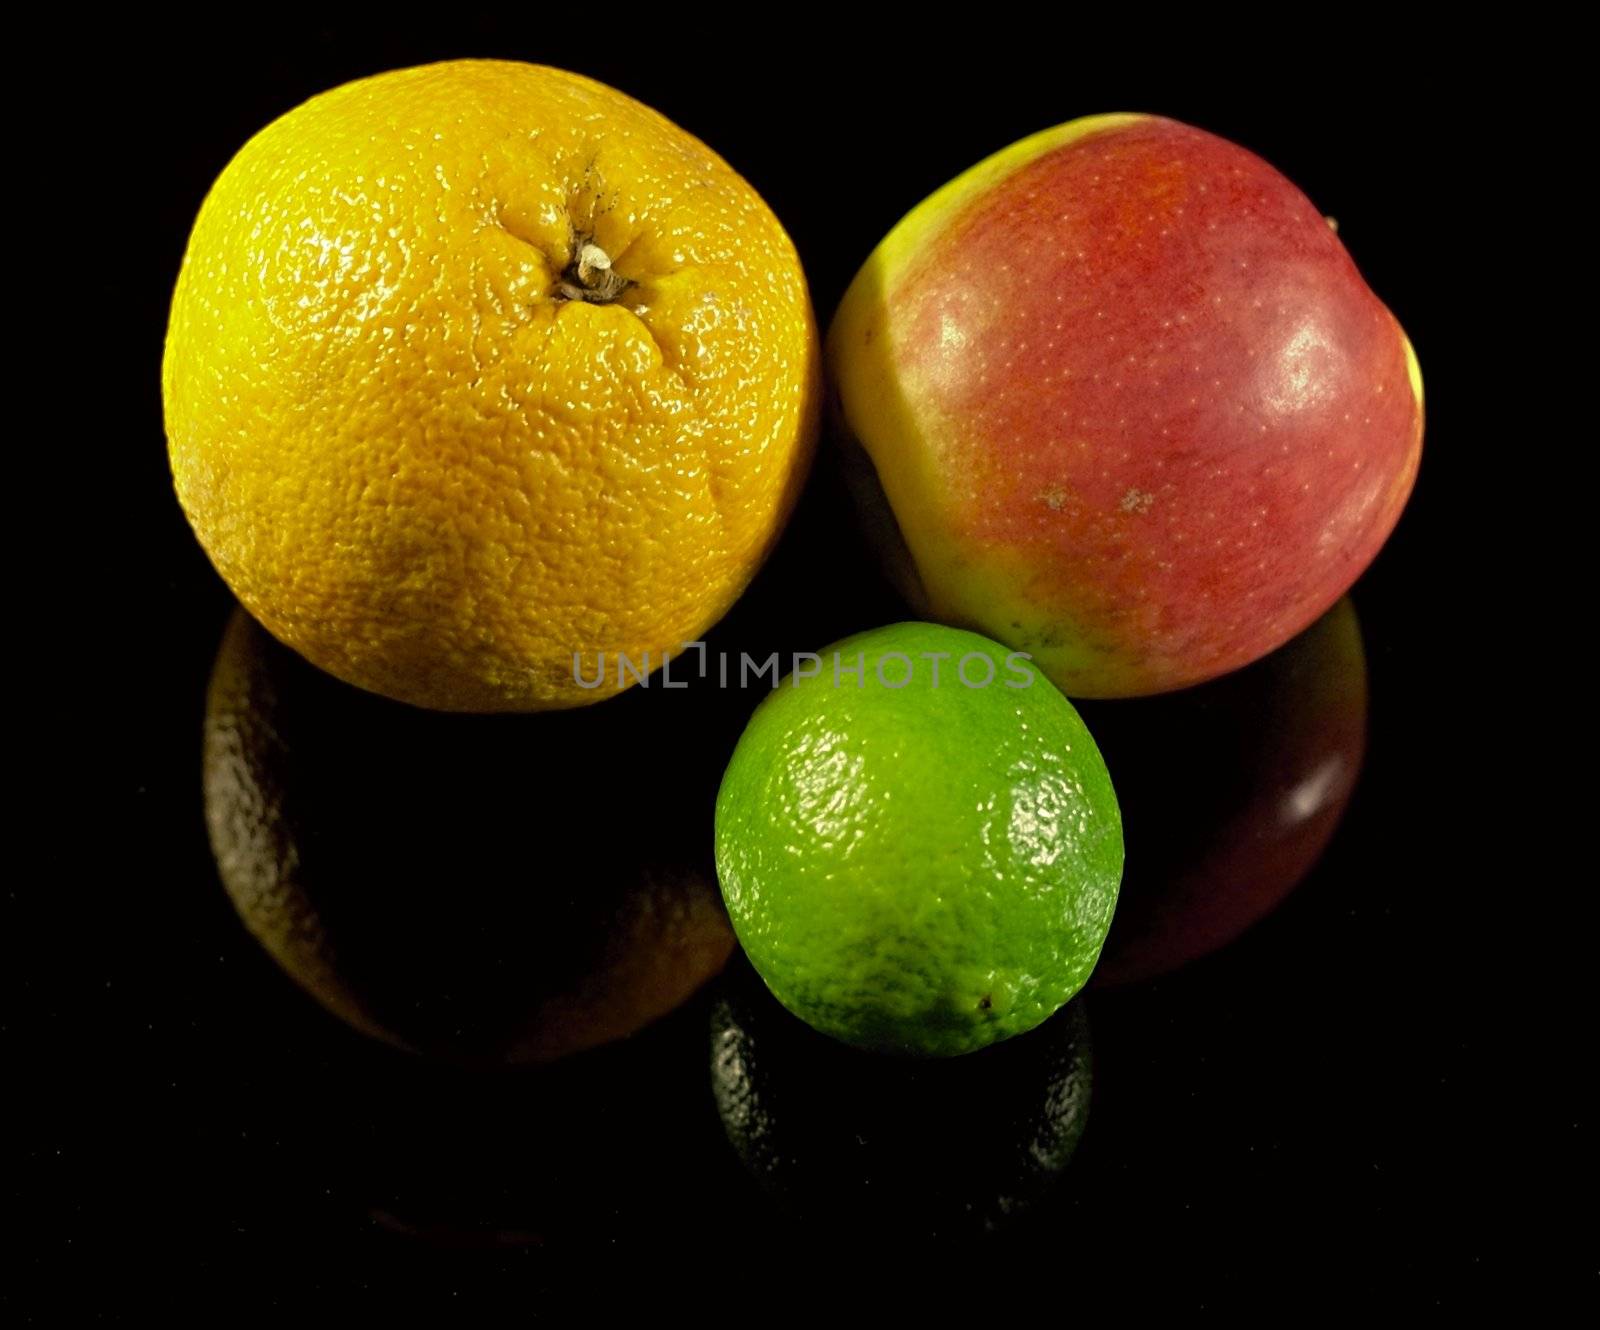 Apple,lemon and orange on black desk with shadows